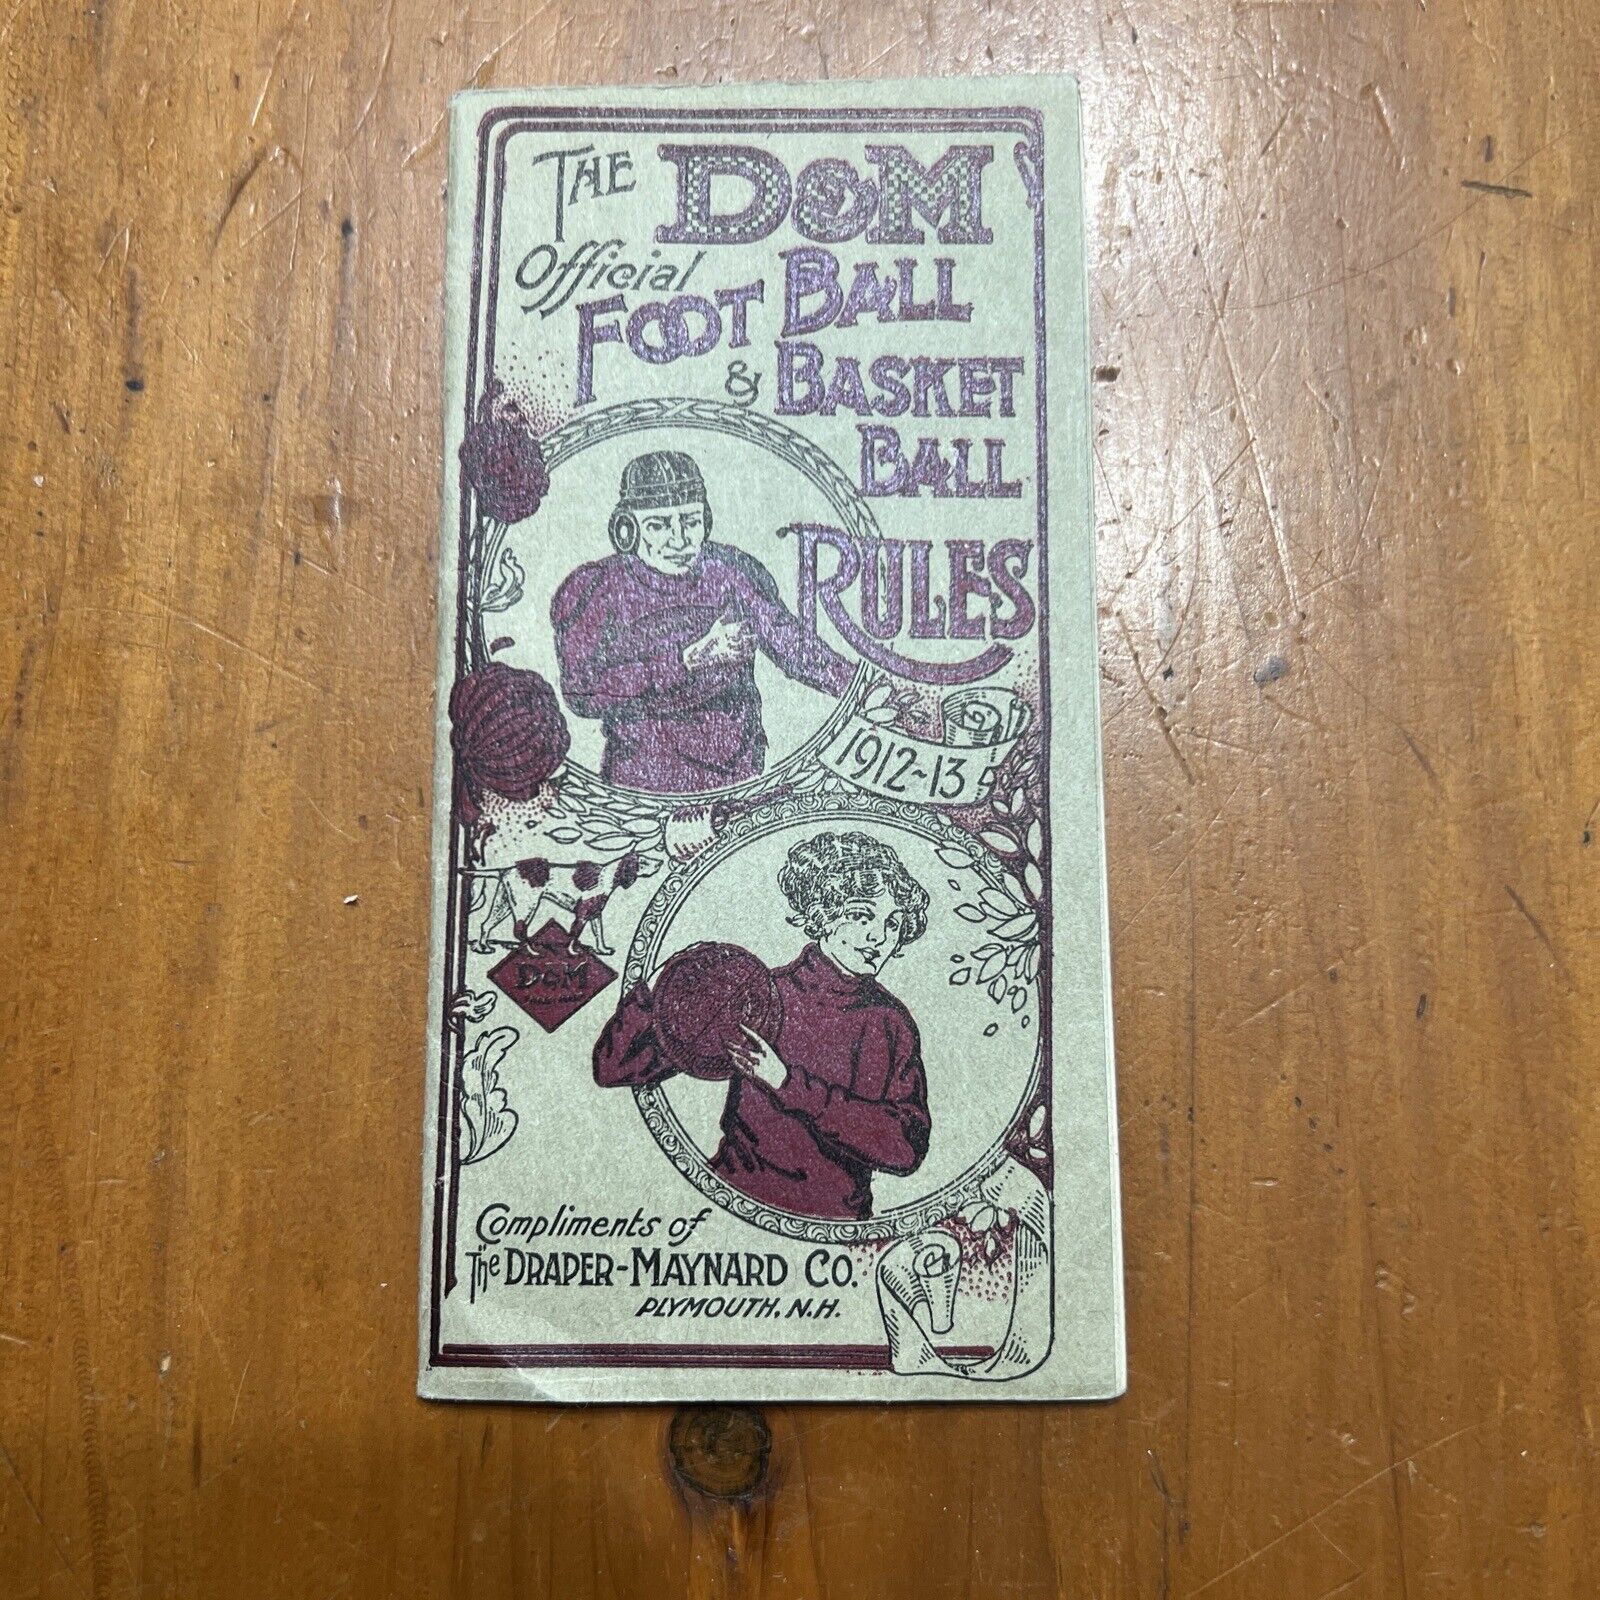 1912 D & M Draper-Maynard Co. Rare Foot Ball Basket Ball Rules Booklet Sharp